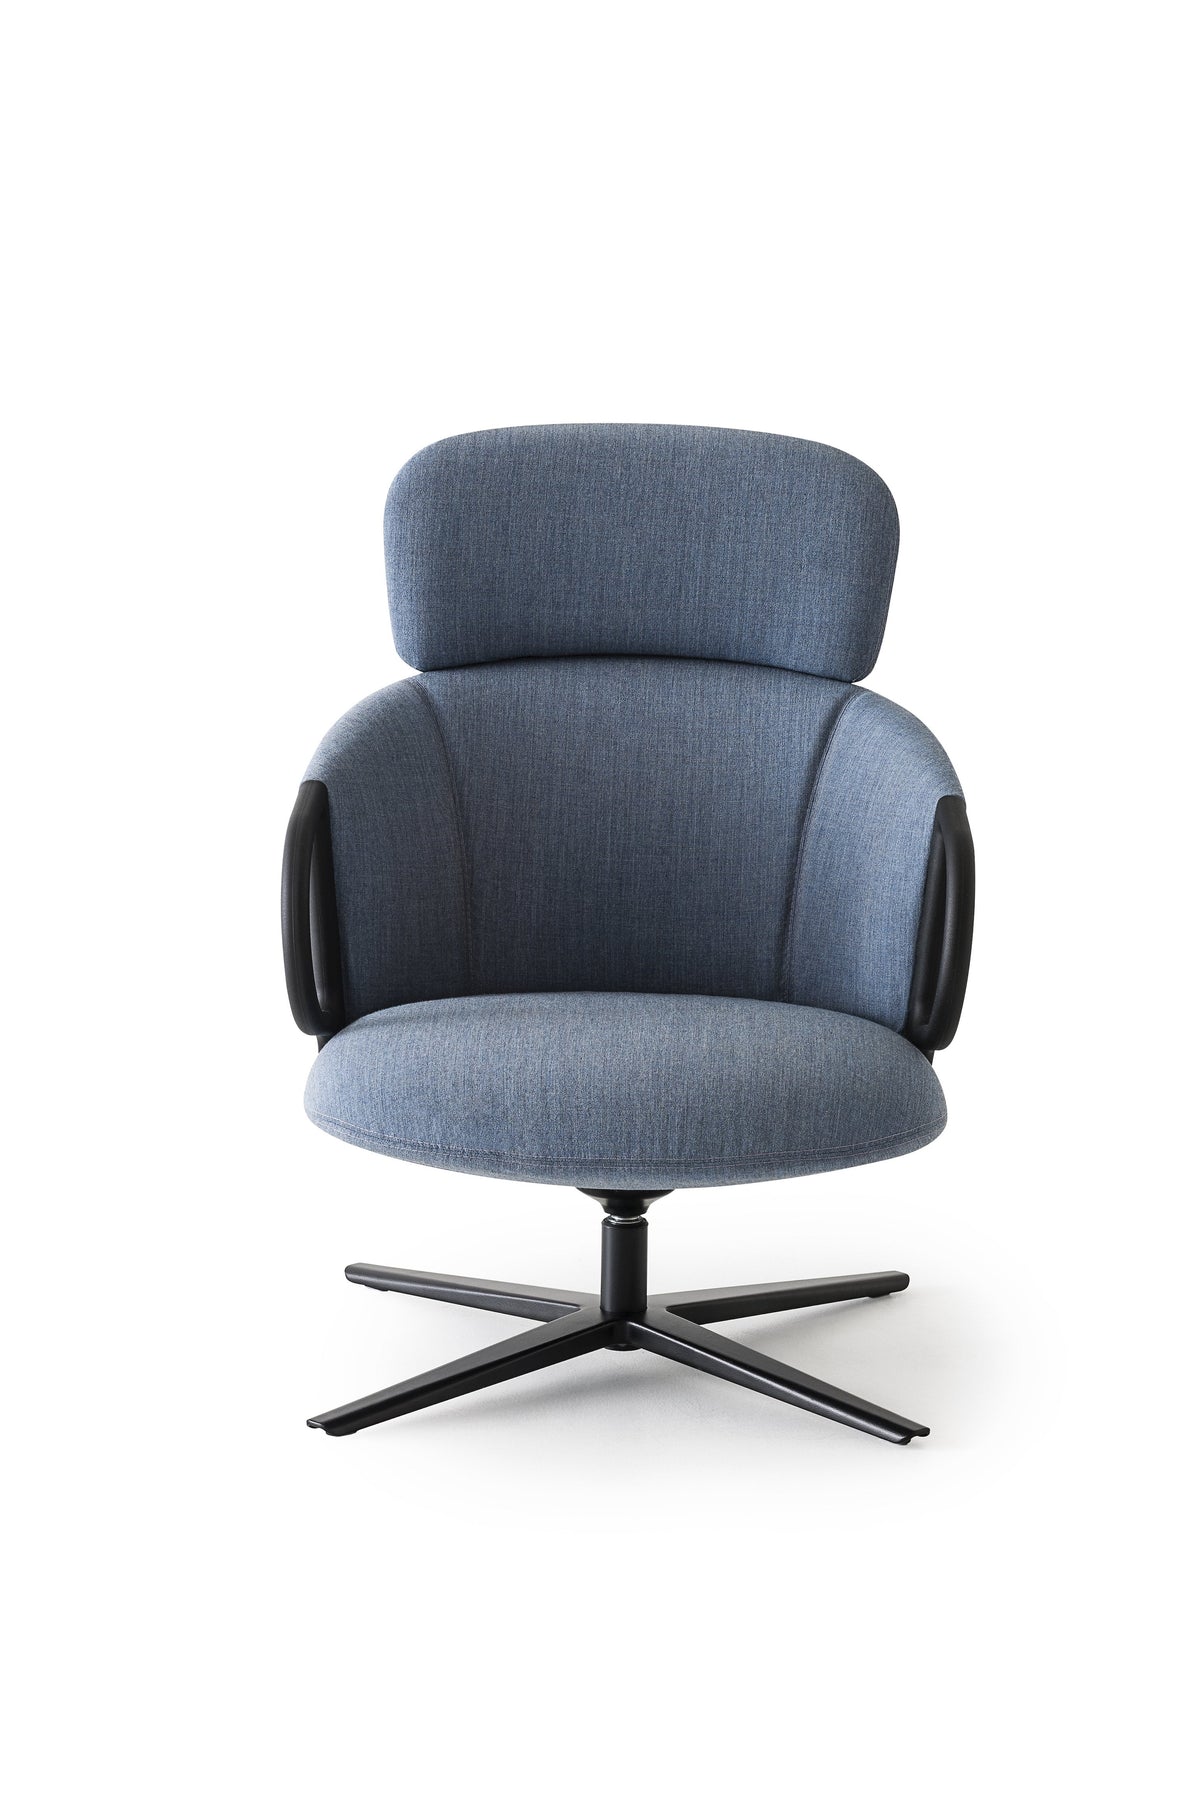 Cucaracha HB Lounge Chair-Gaber-Contract Furniture Store